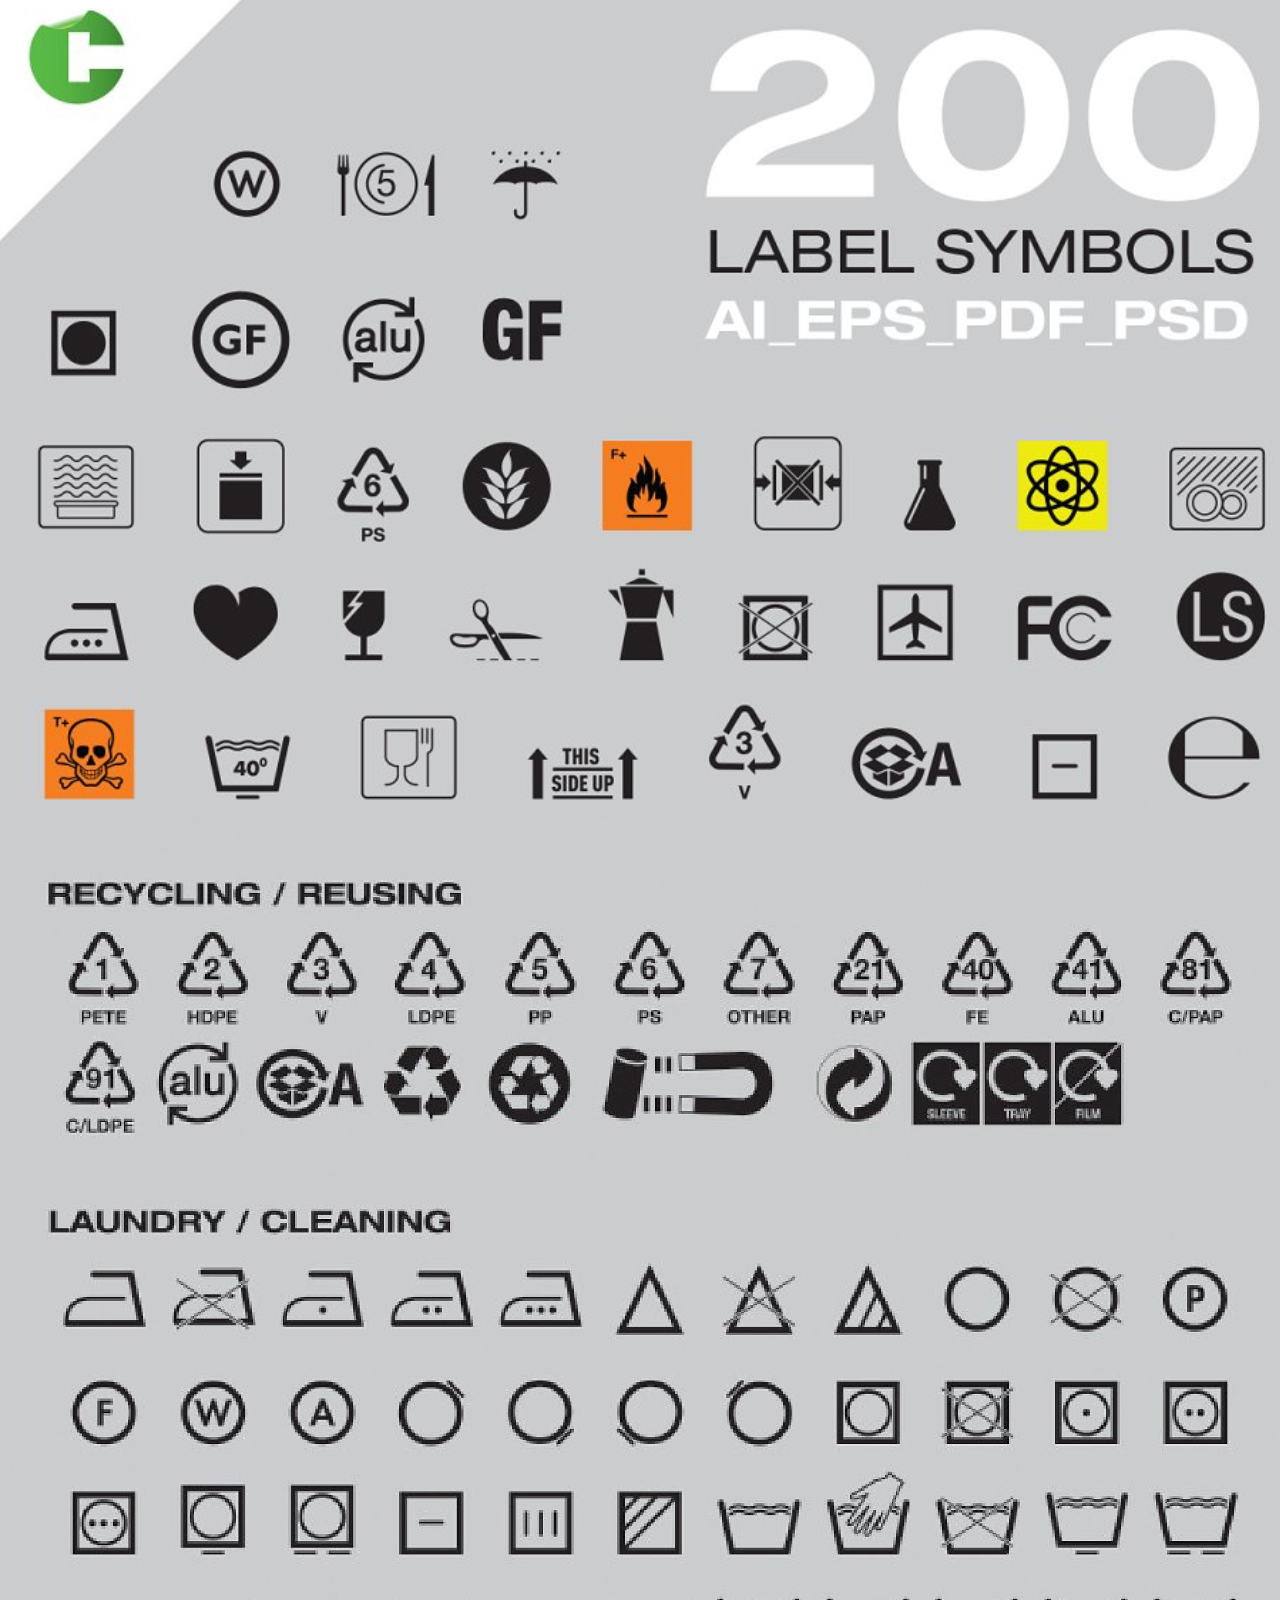 200 label symbols pinterest image.